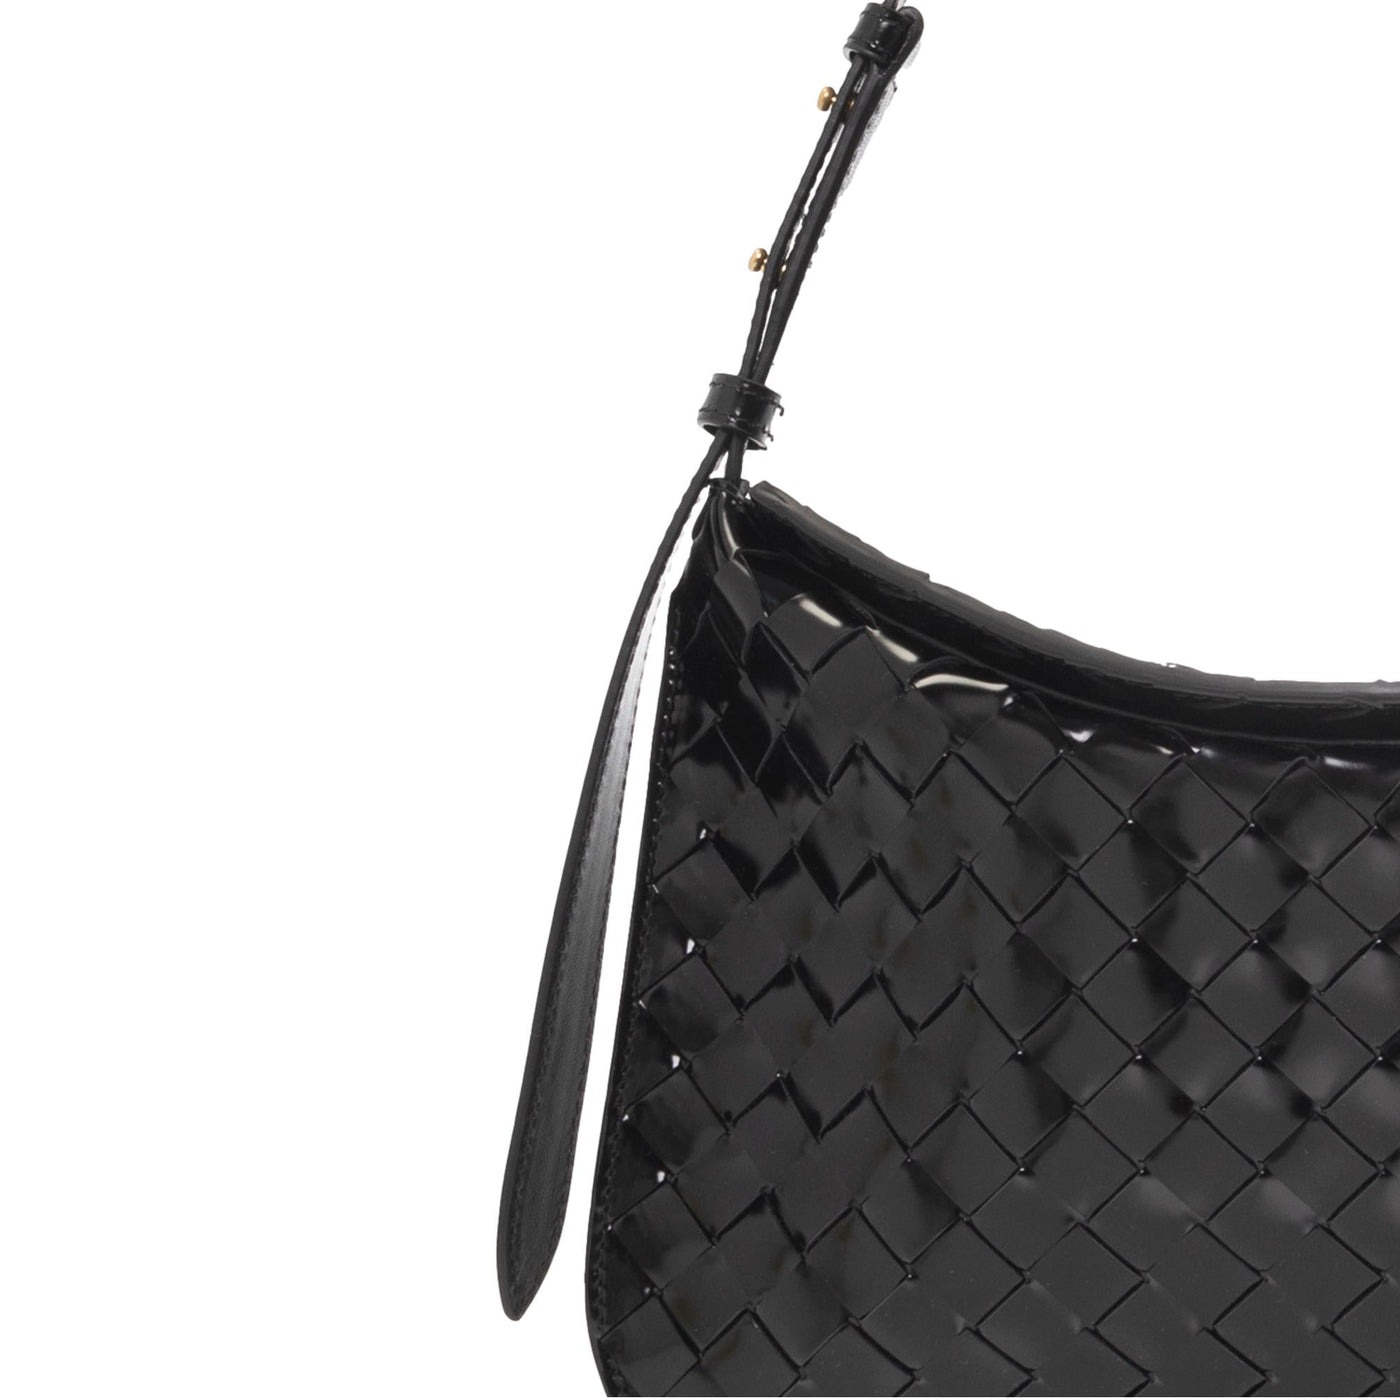 Bottega Veneta Intrecciato Patent Black Leather Flap Small Shoulder Bag - LUXURYMRKT